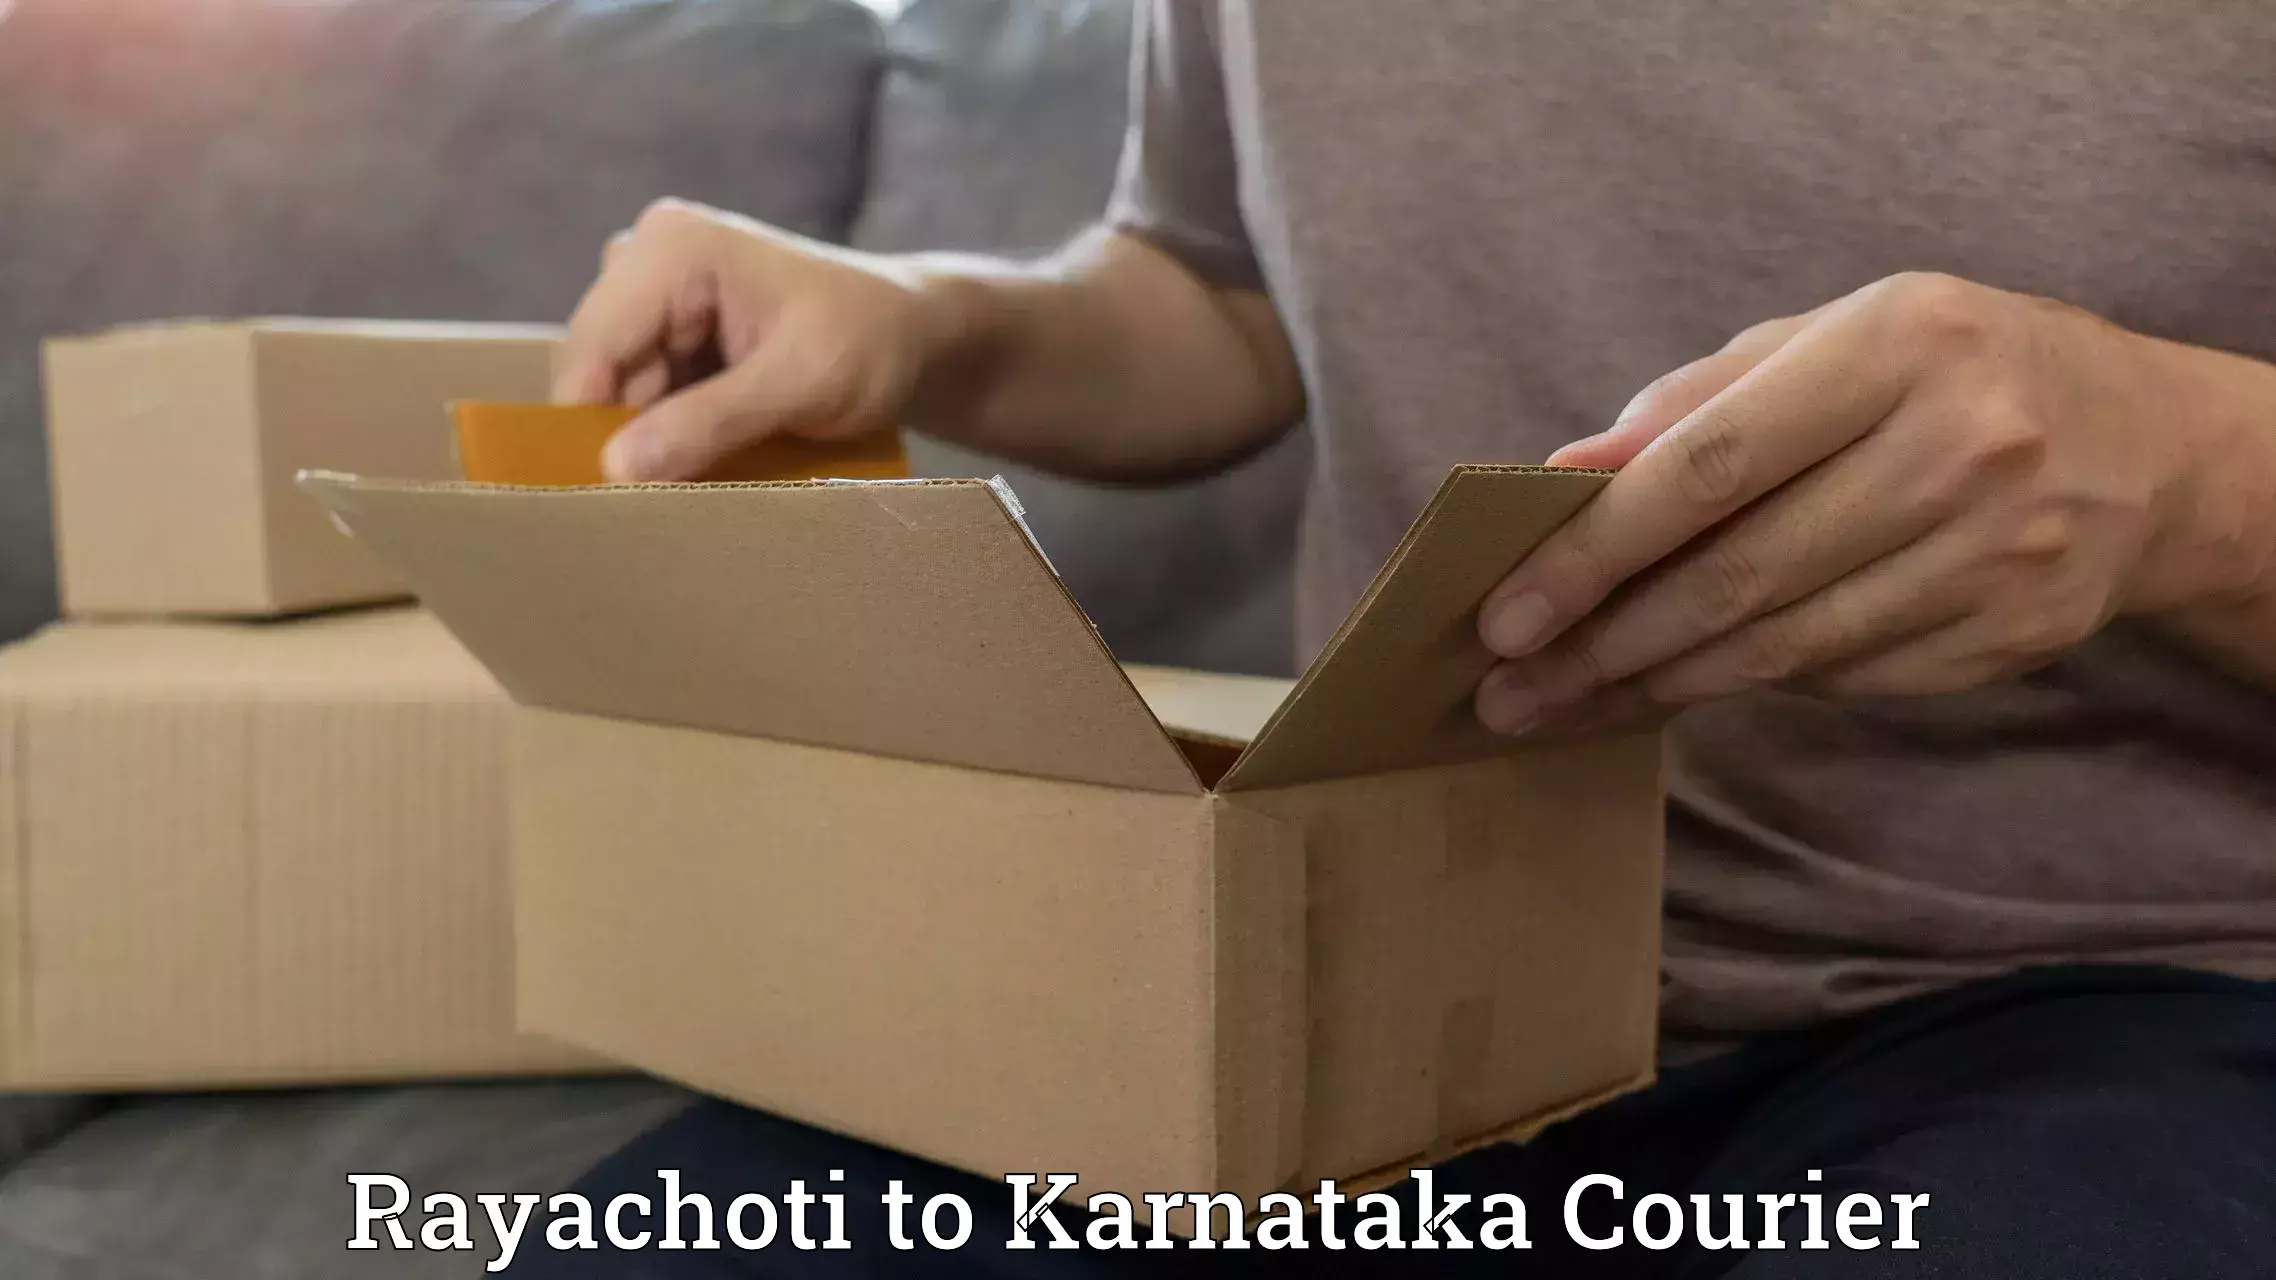 Global parcel delivery Rayachoti to Bengaluru